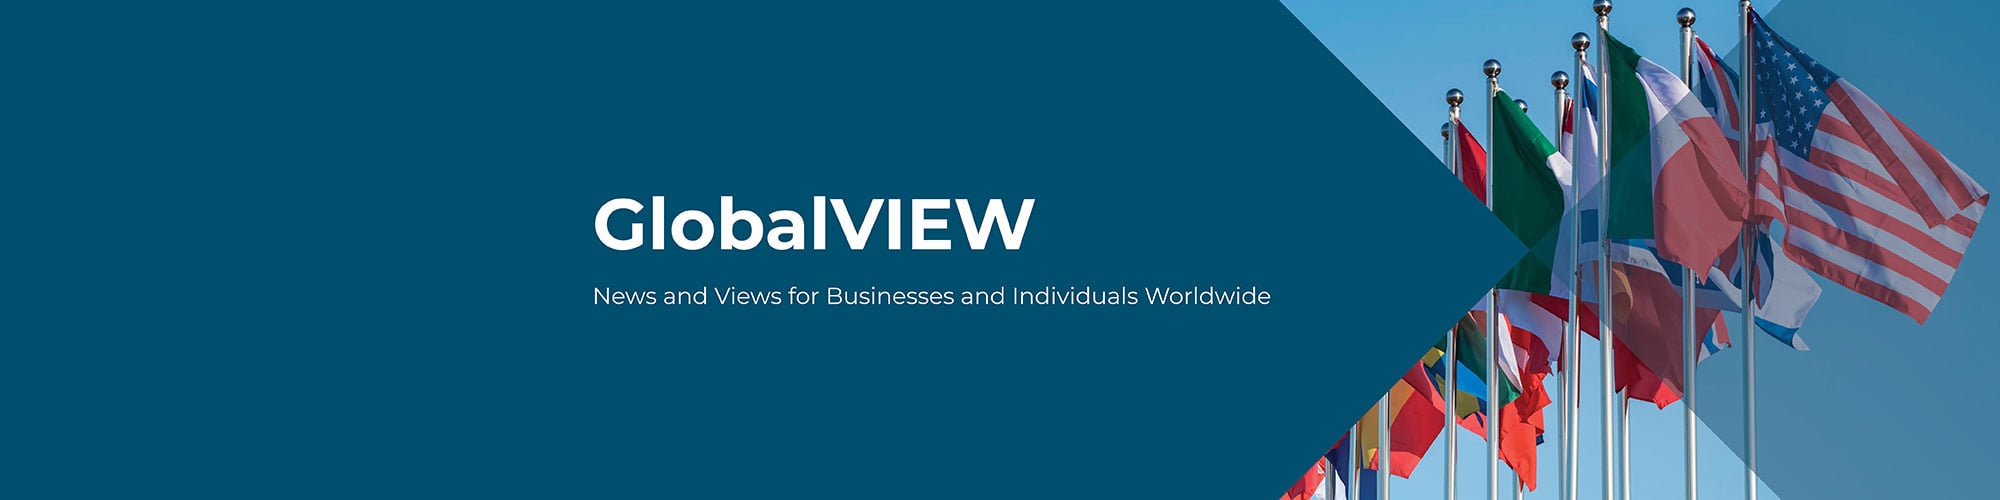 GlobalVIEW-Webpage-Header-final-2